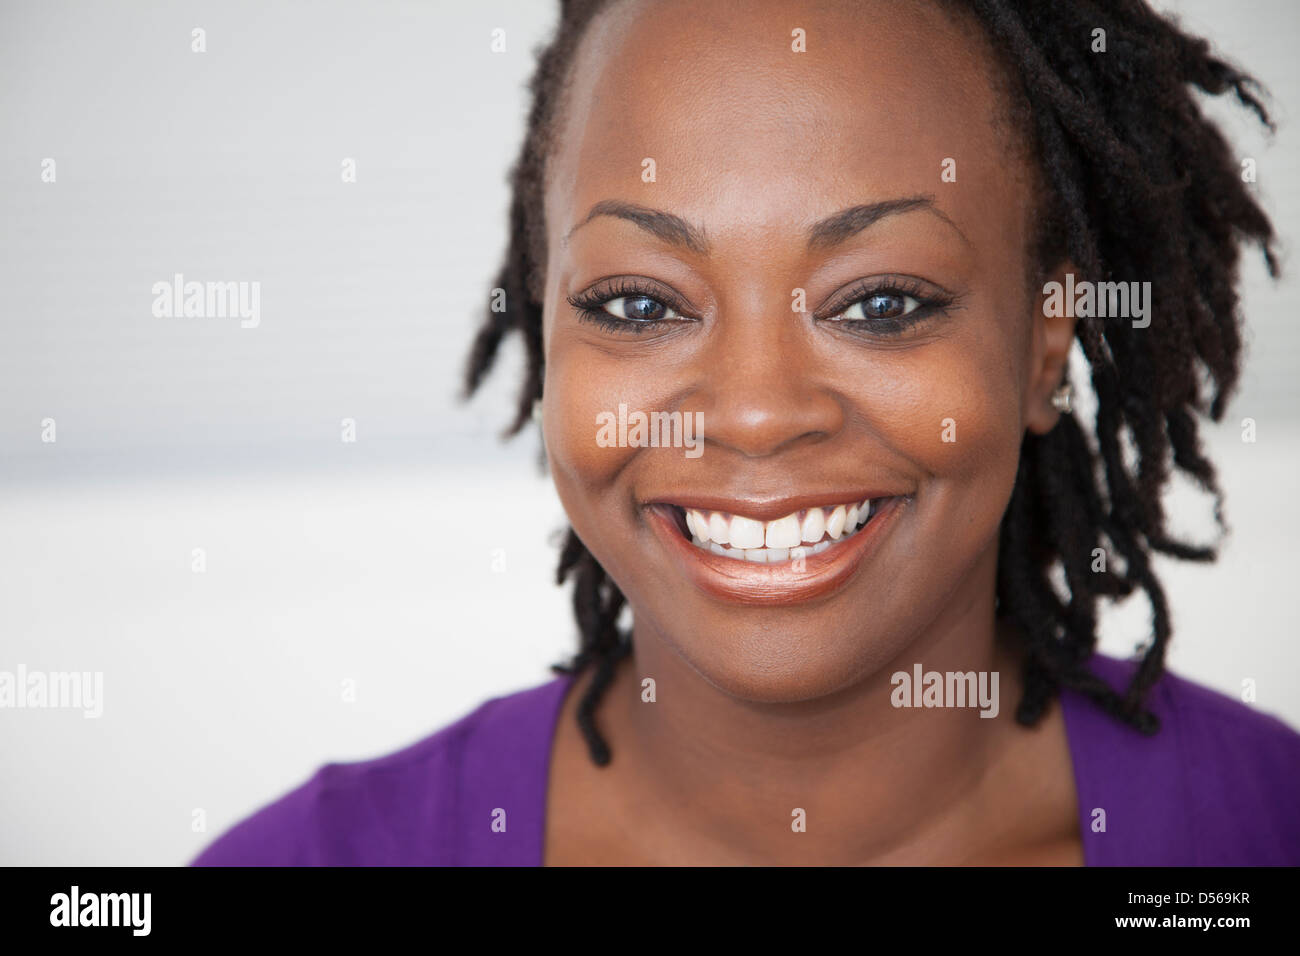 Smiling Black woman Stock Photo - Alamy